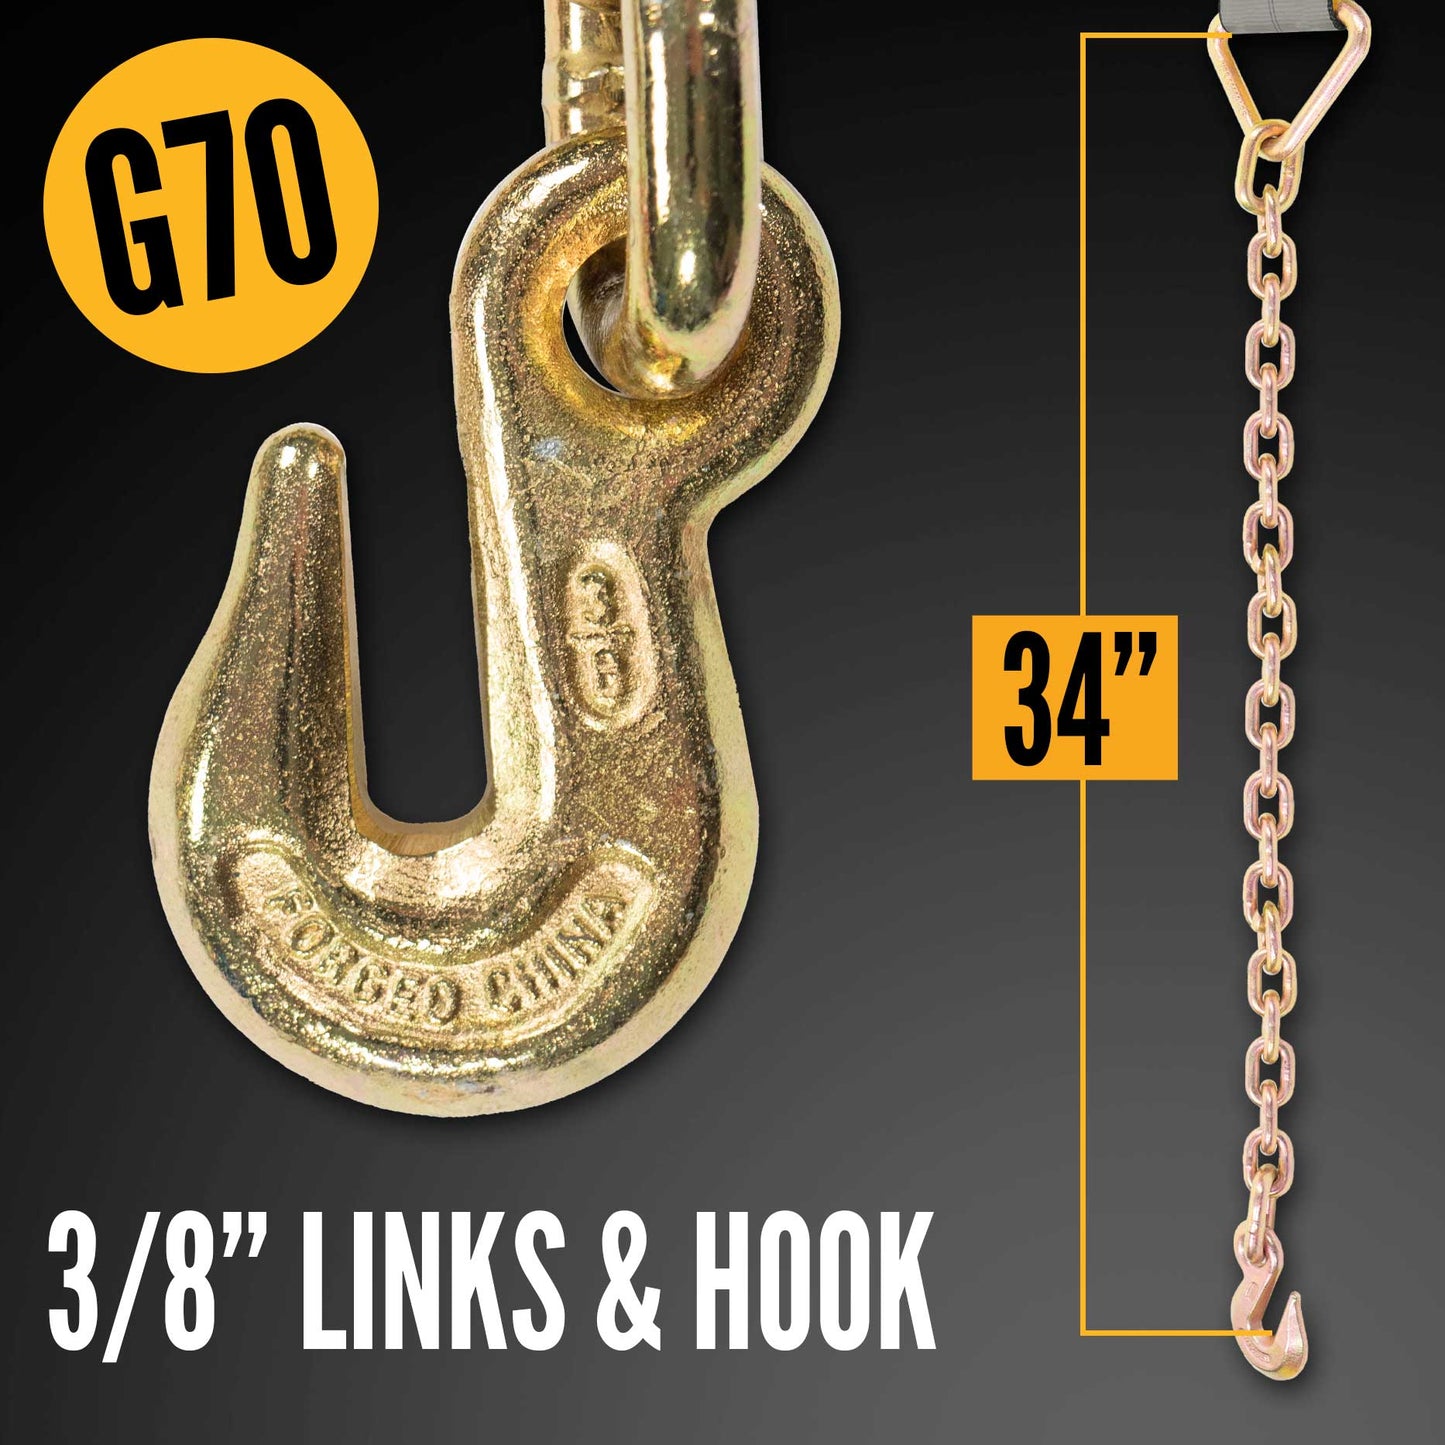 30' heavy duty BlackLine 34" grade 70 chain end with 3/8" grab hook